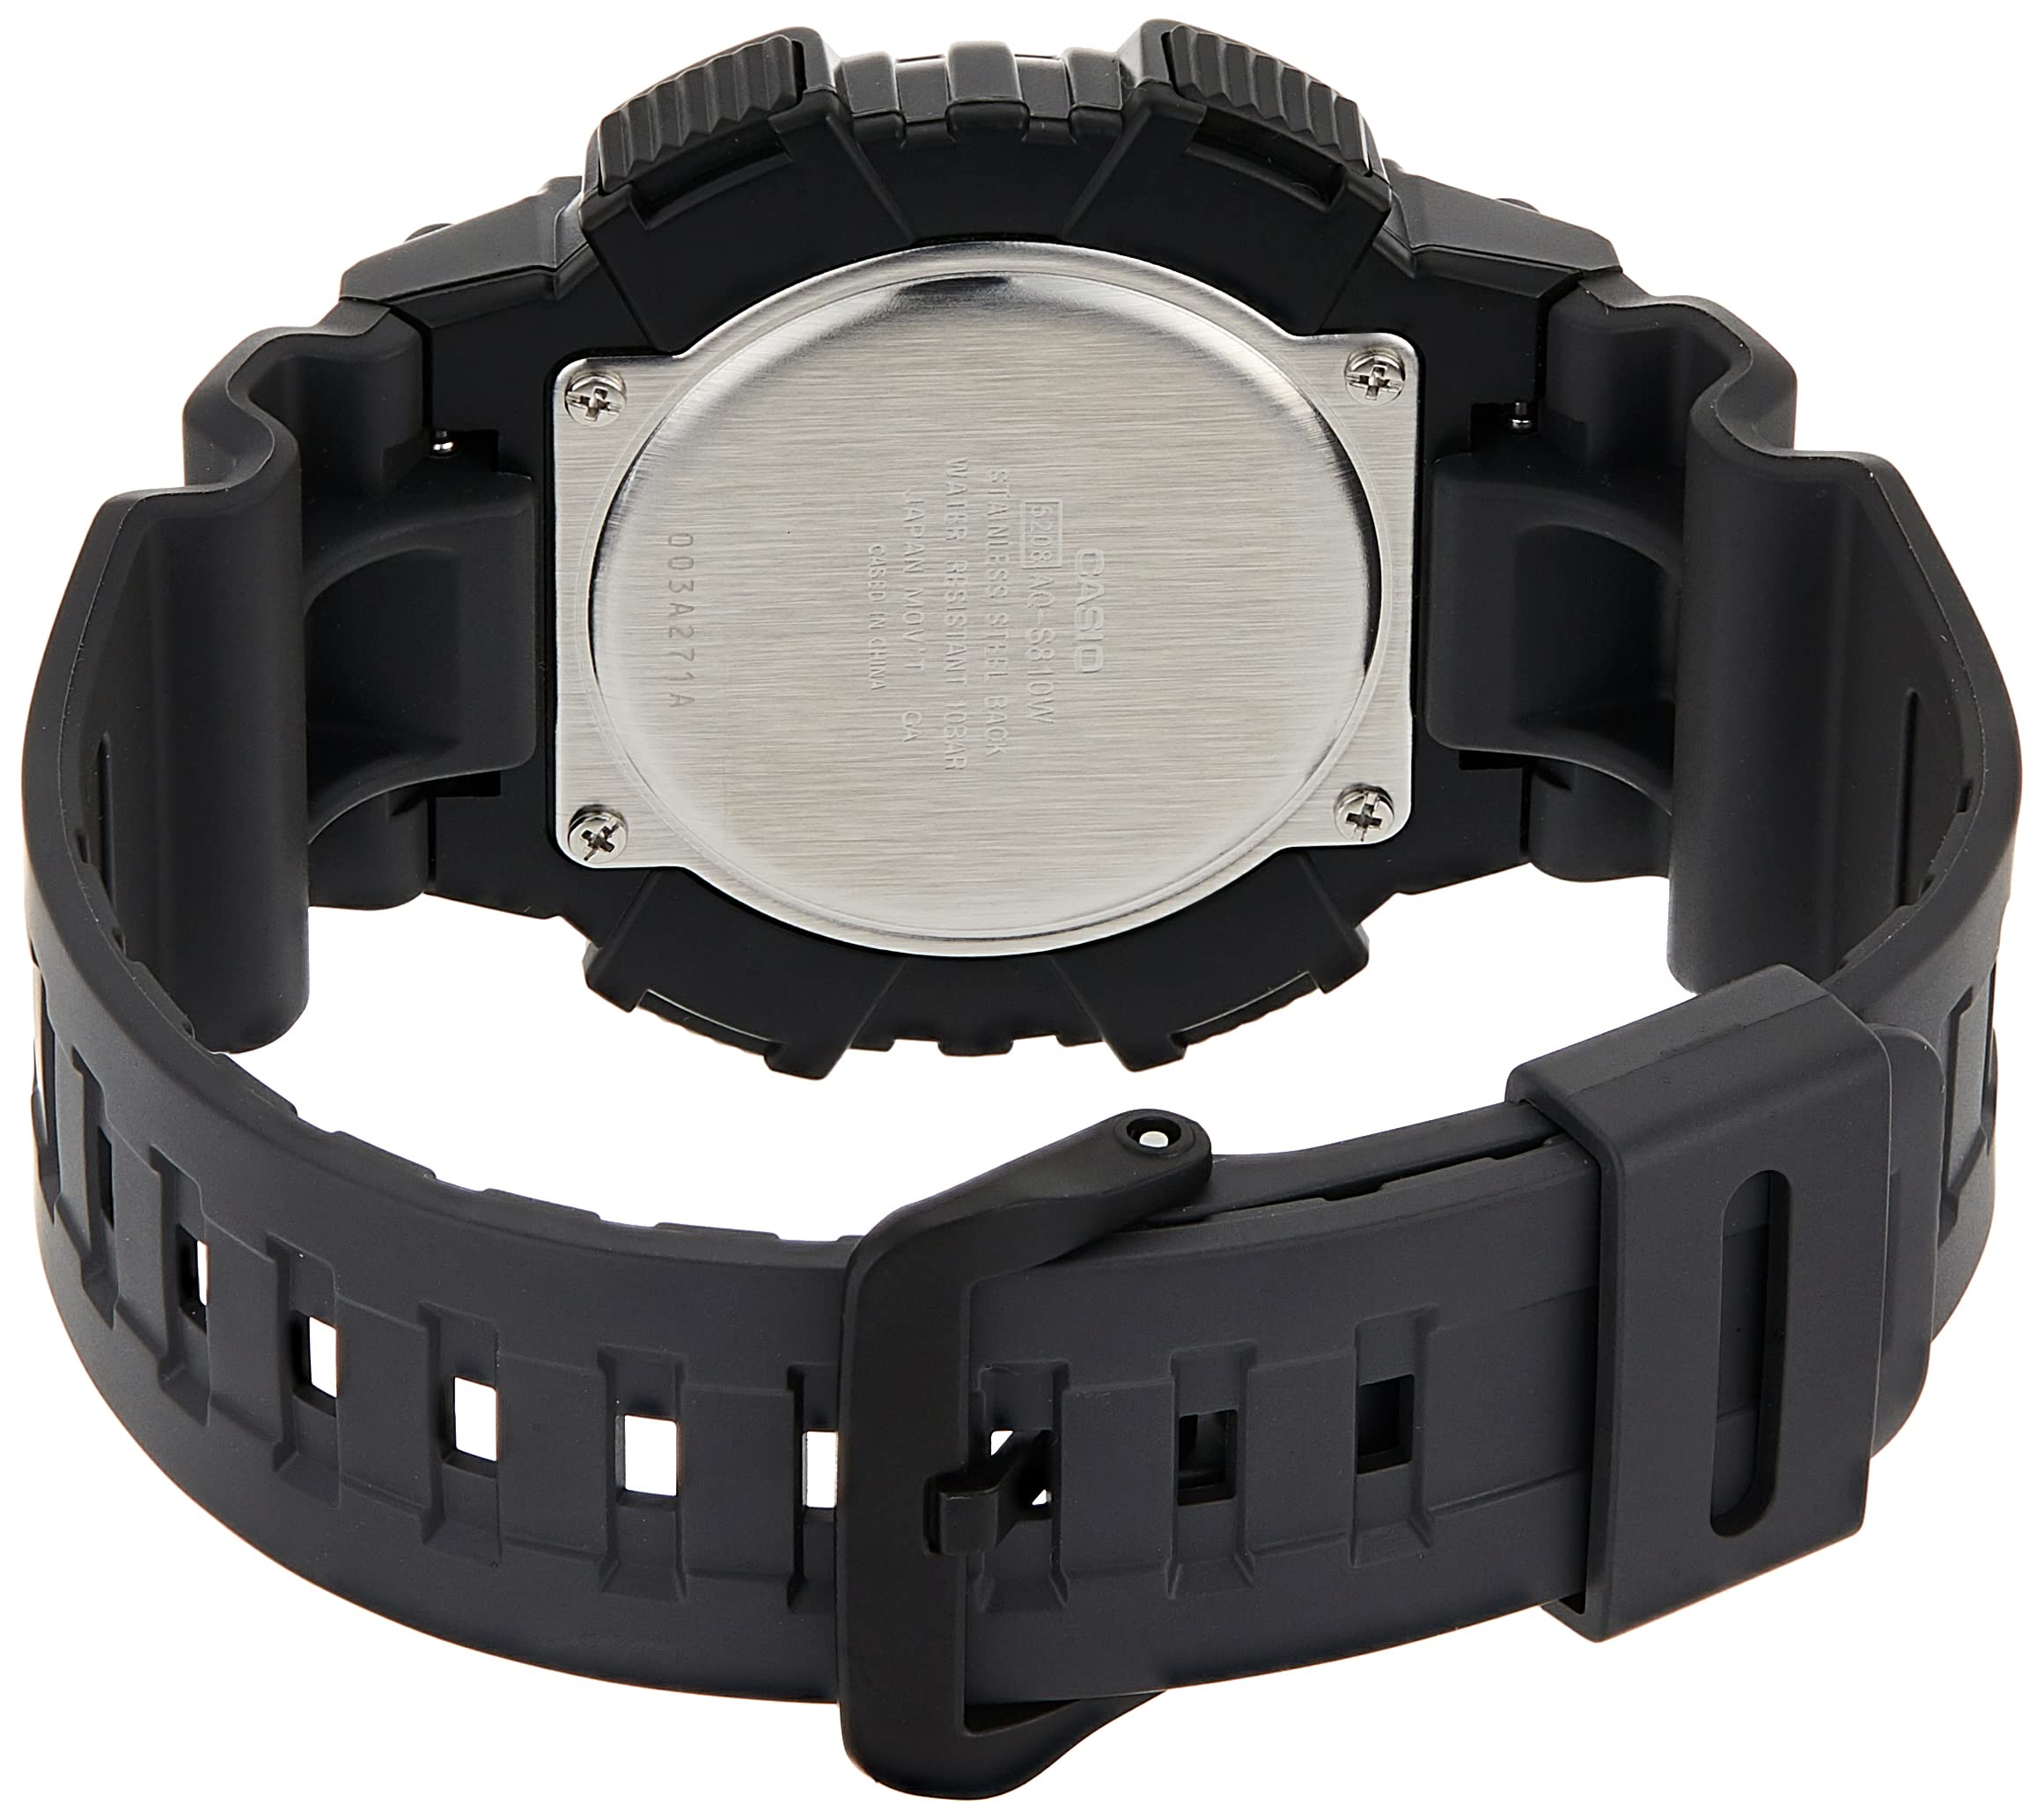 Casio Men's Sport AQS810W-8AV Grey Rubber Quartz Watch with Black Dial